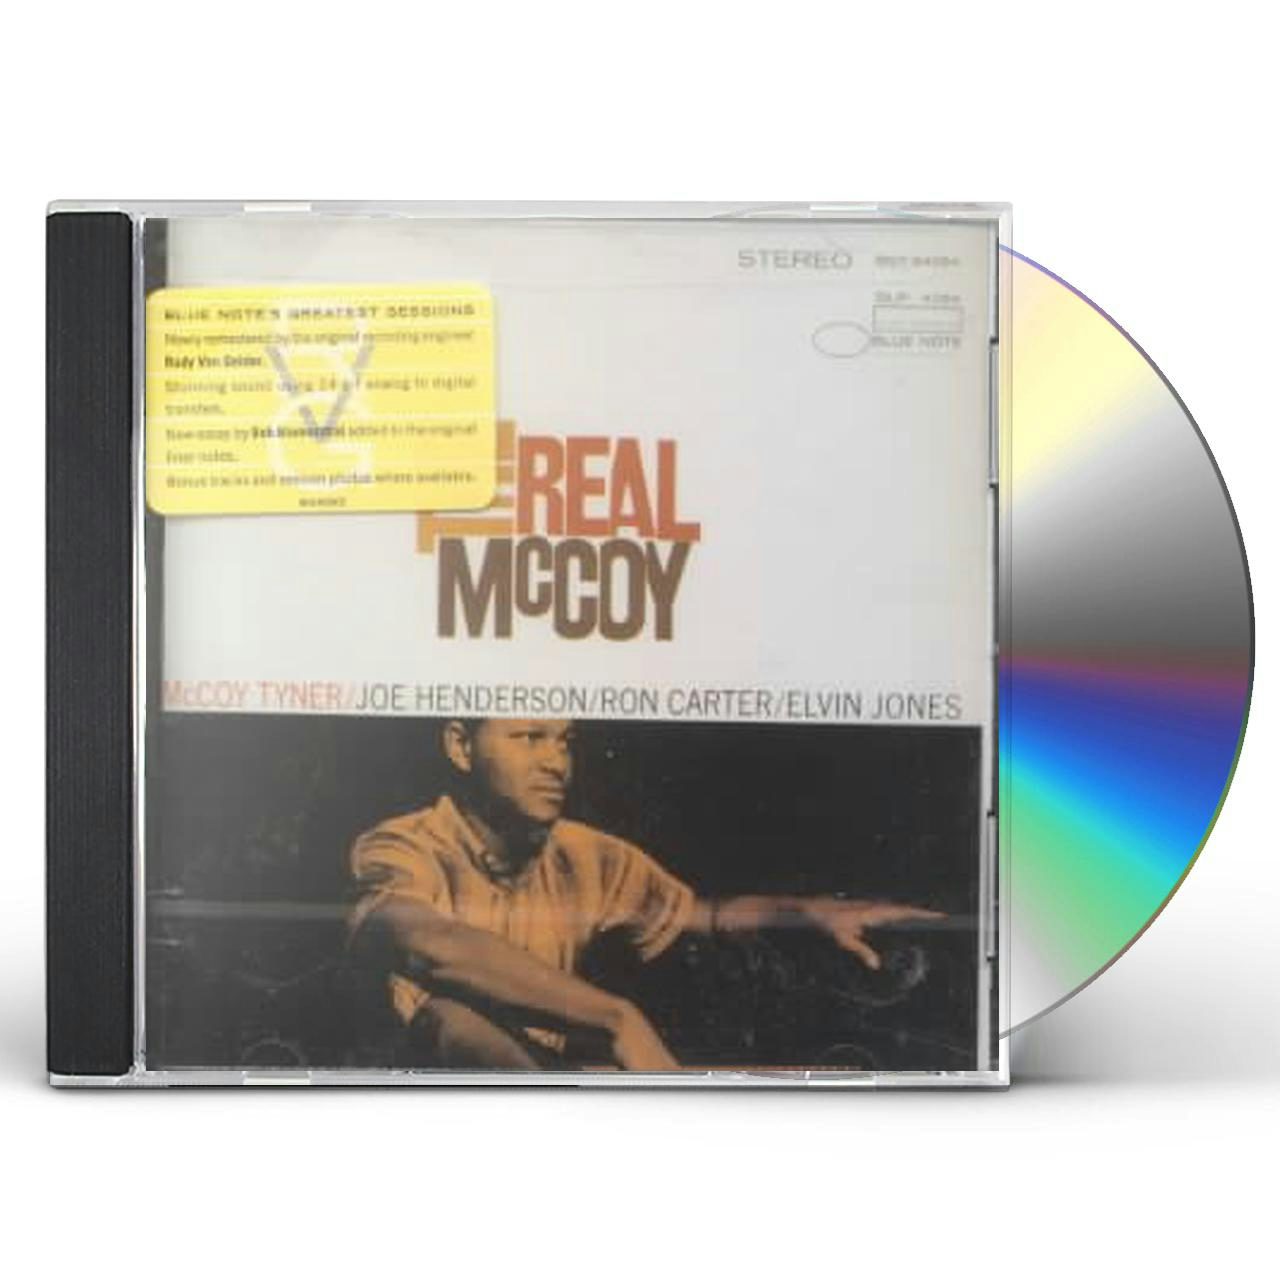 The Real Mccoy CD